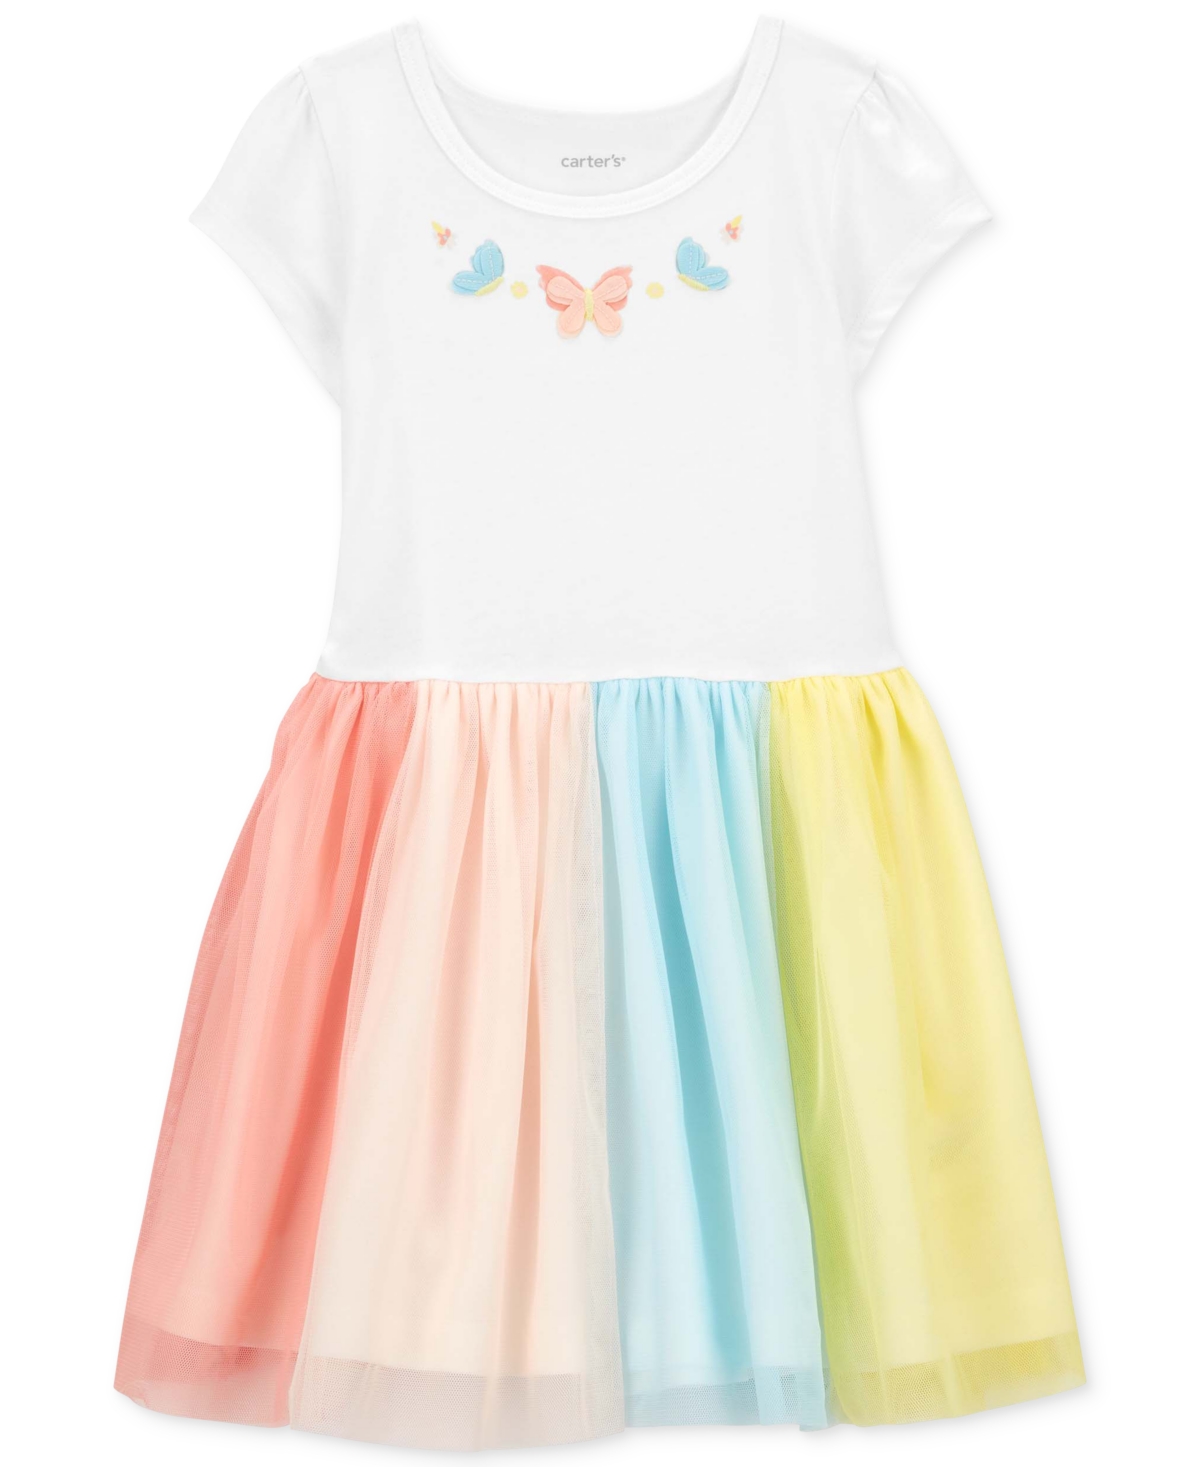 Carter's Babies' Toddler Girls Rainbow Tutu Dress In Multi